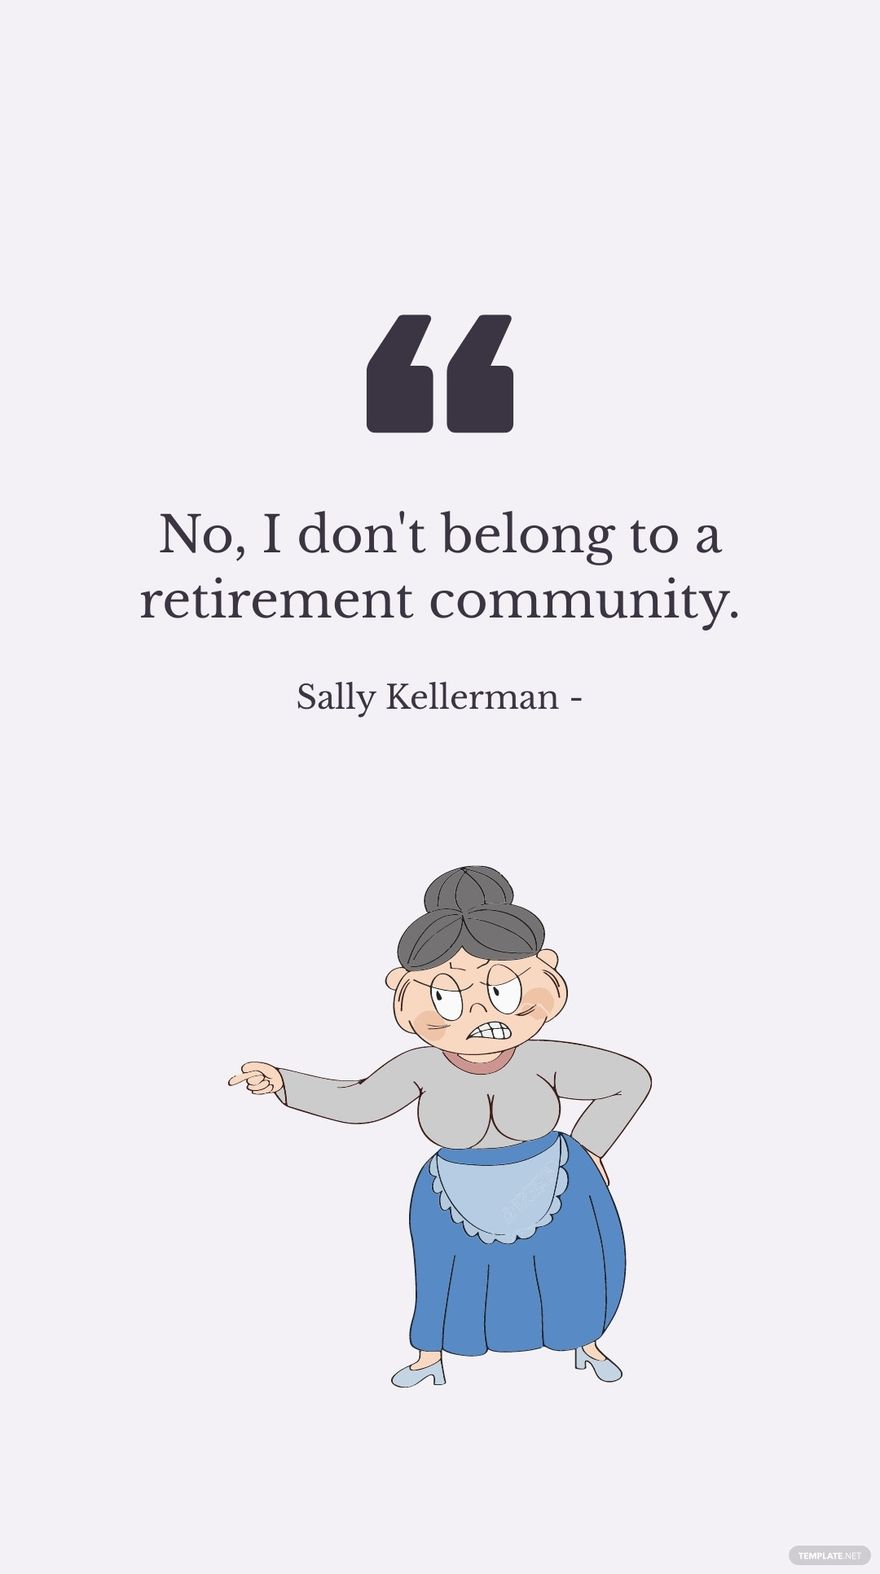 Sally Kellerman - No, I don't belong to a retirement community.